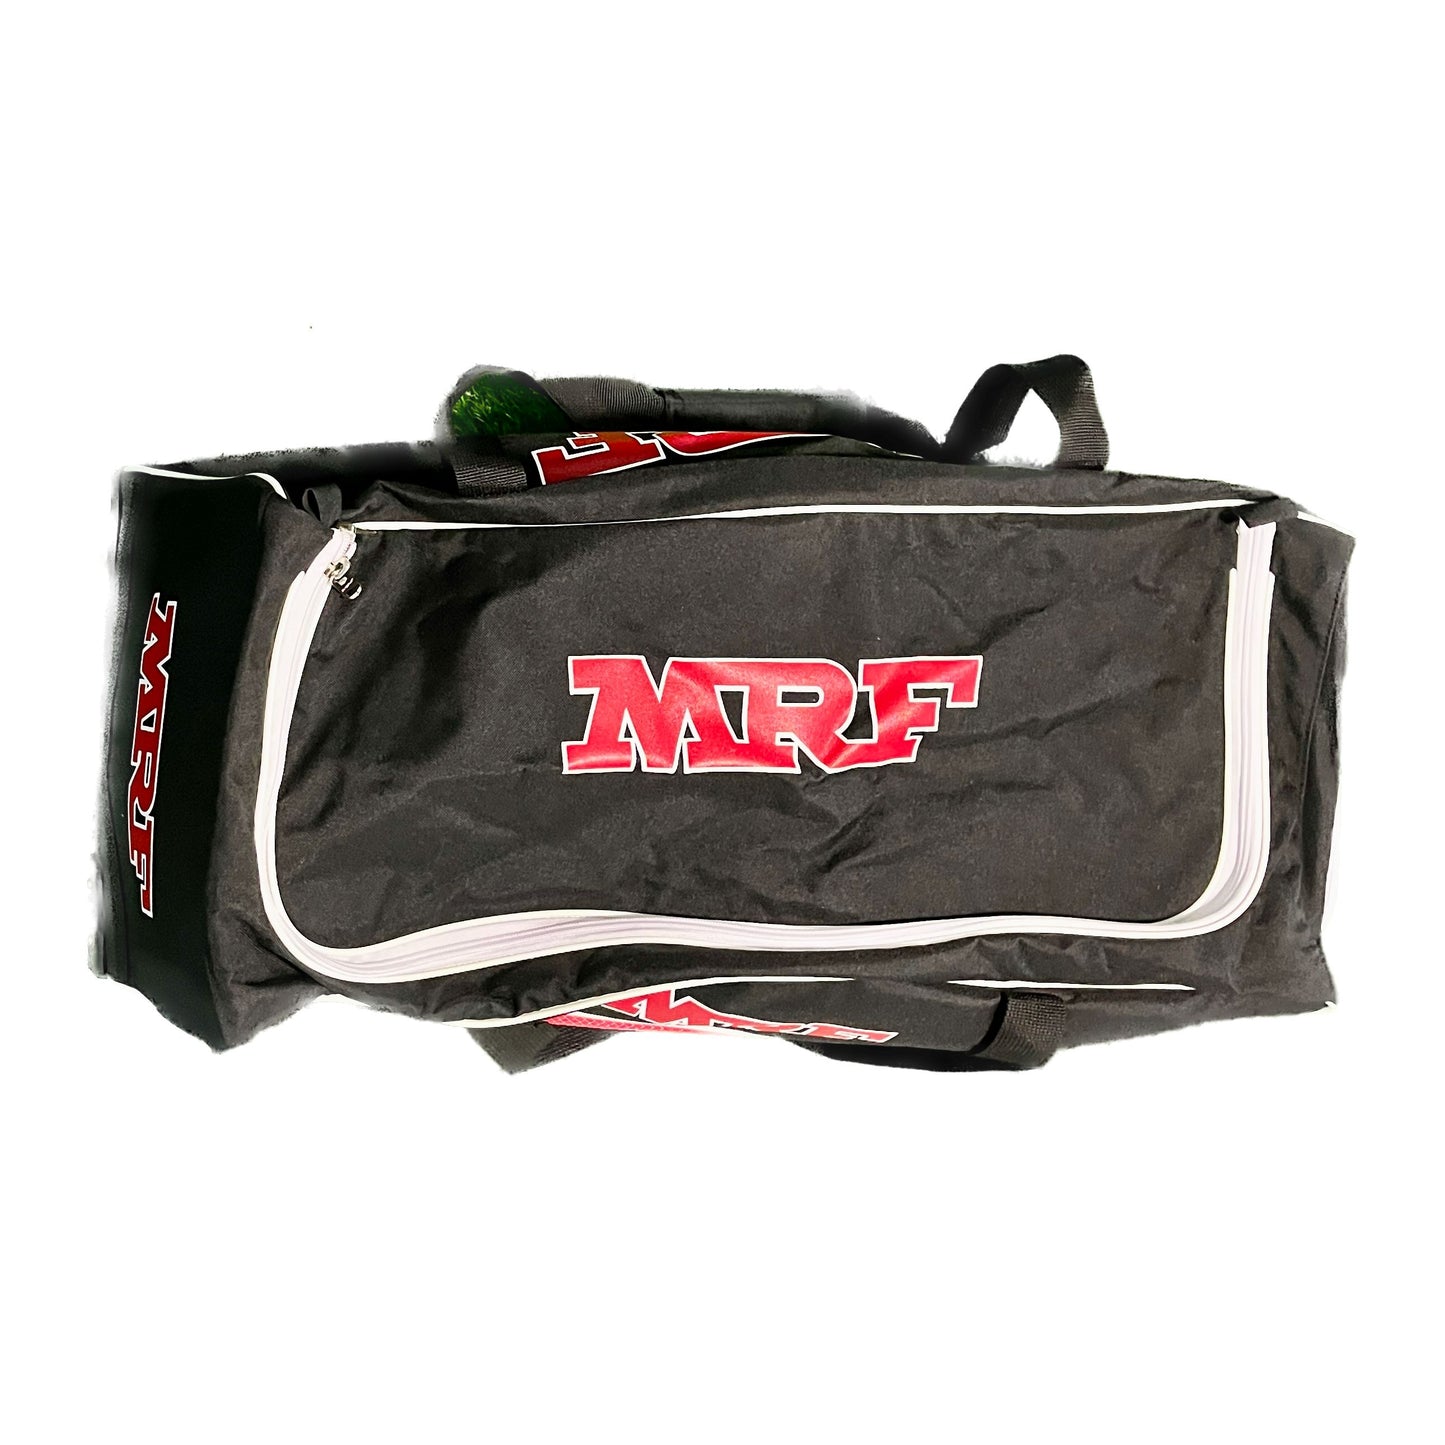 MRF Elite Junior Cricket Kit Bag with wheels